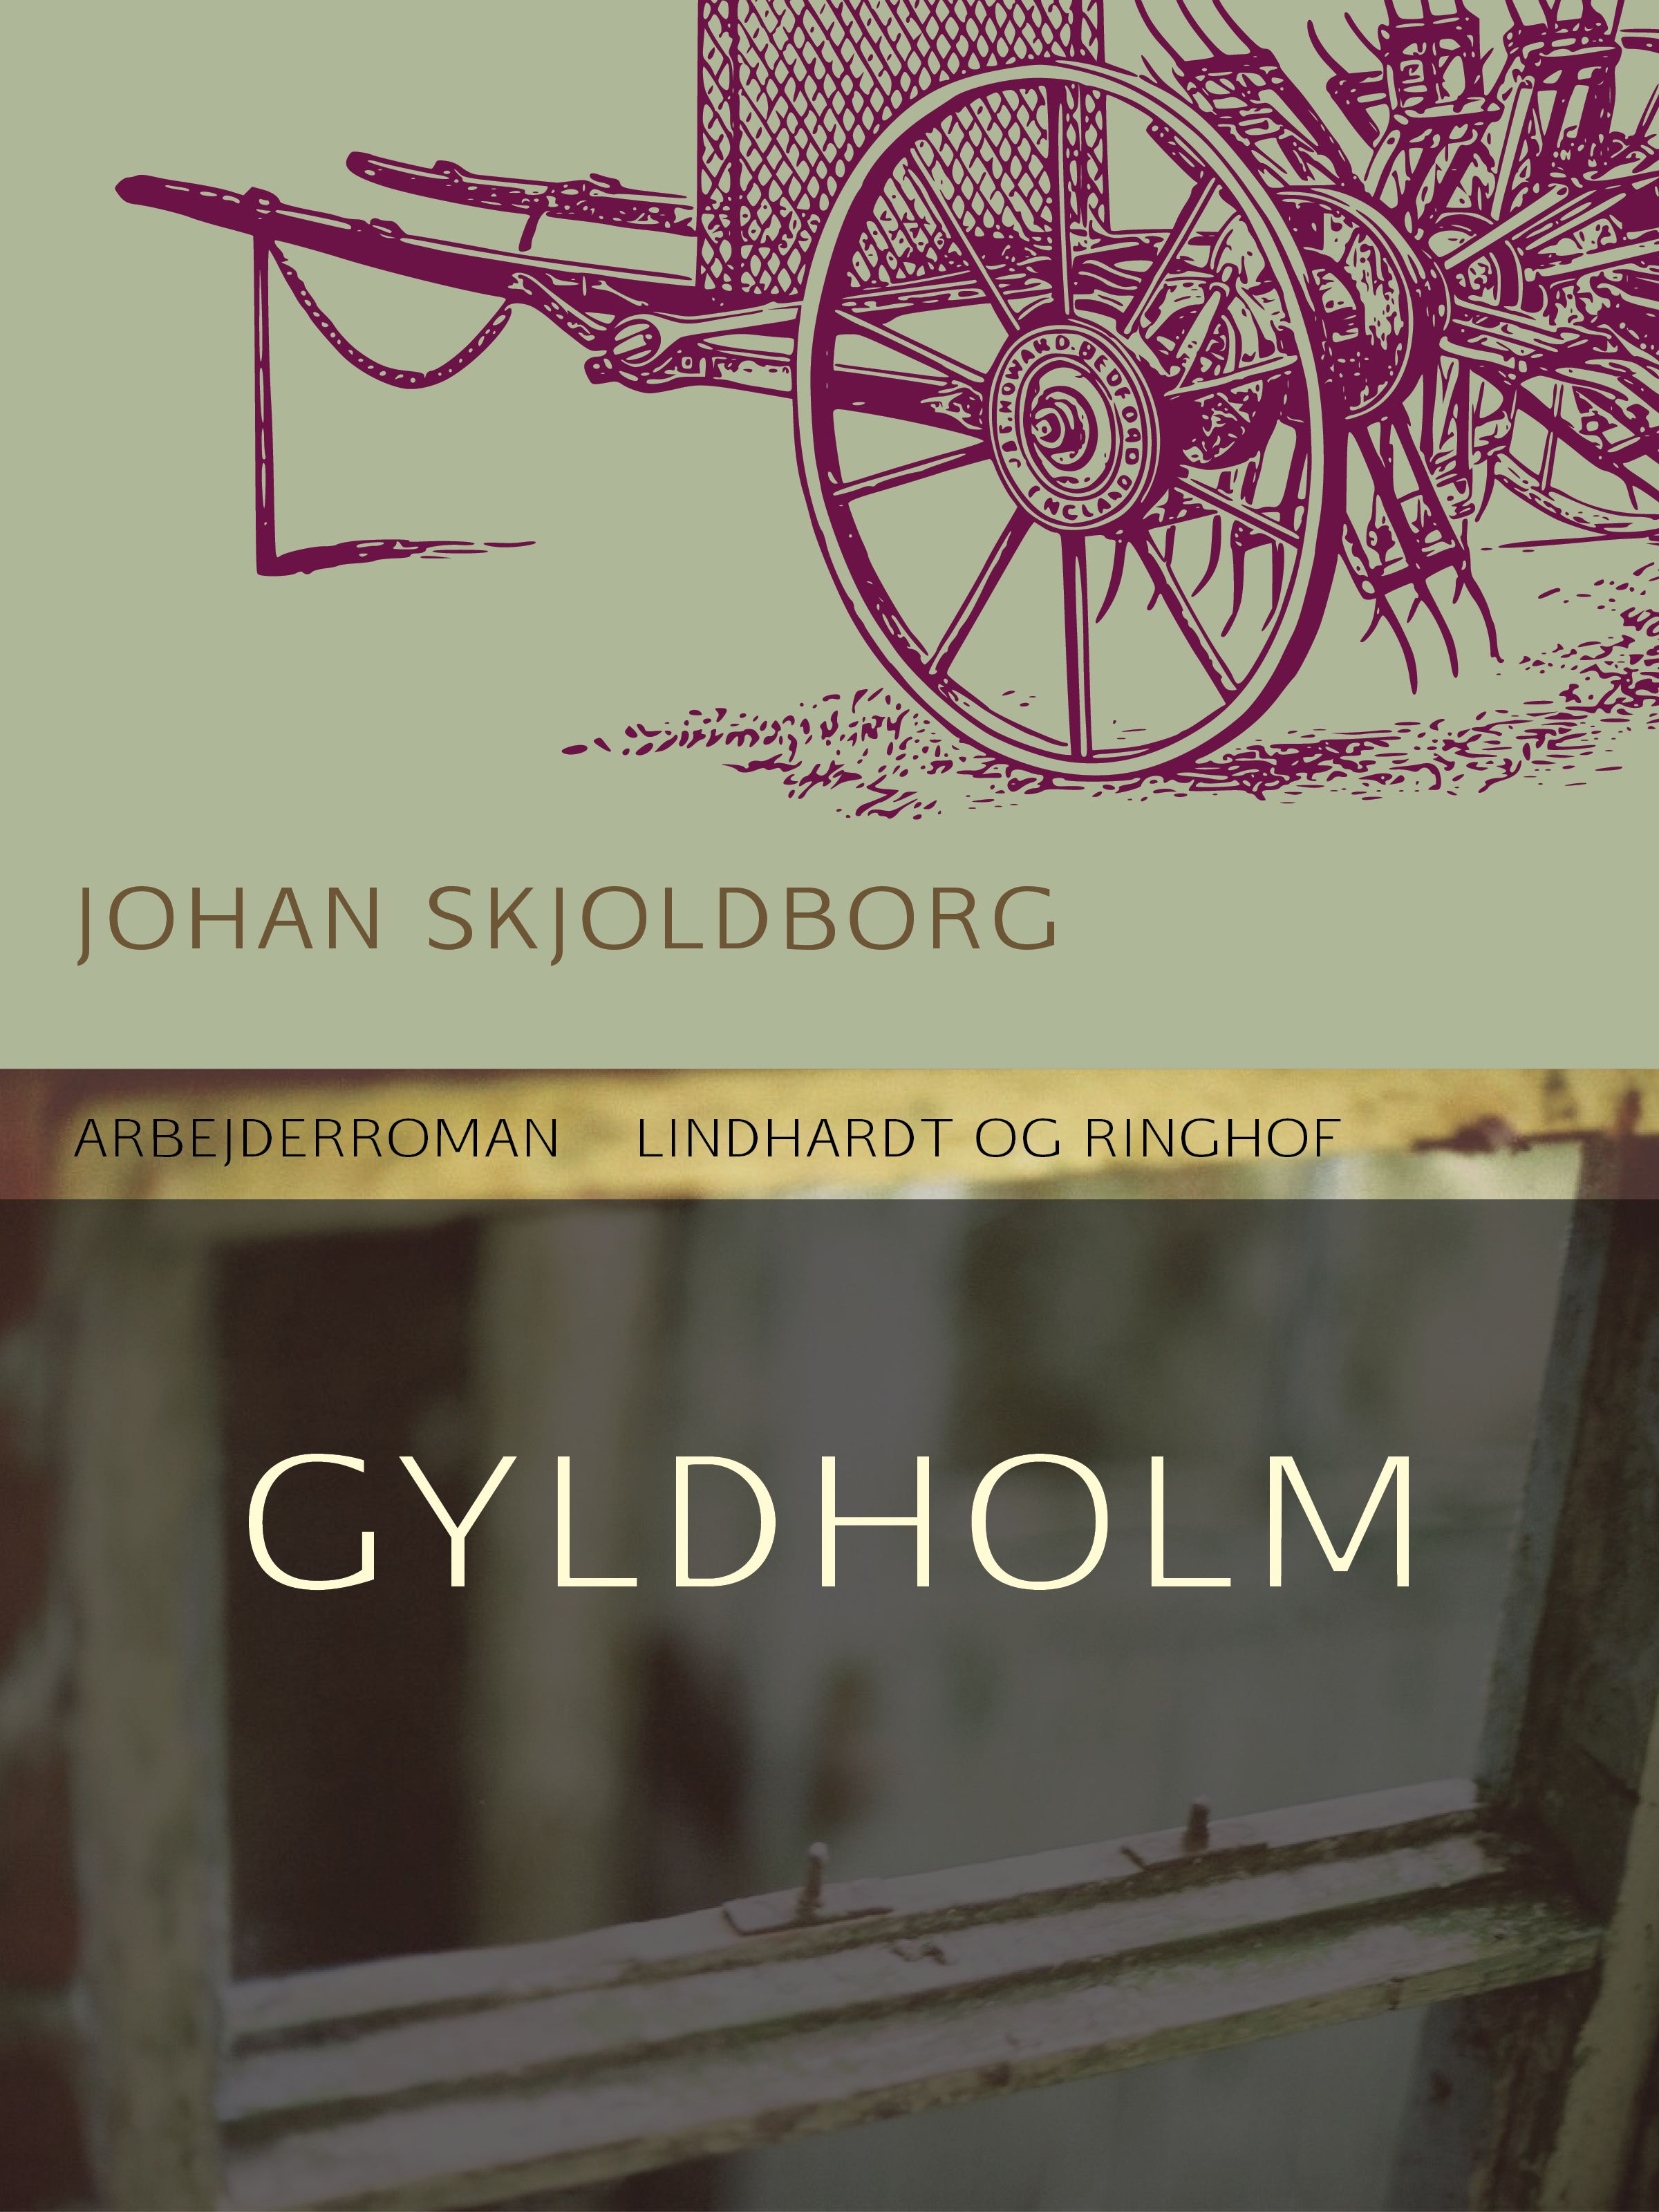 Gyldholm, ljudbok av Johan Skjoldborg